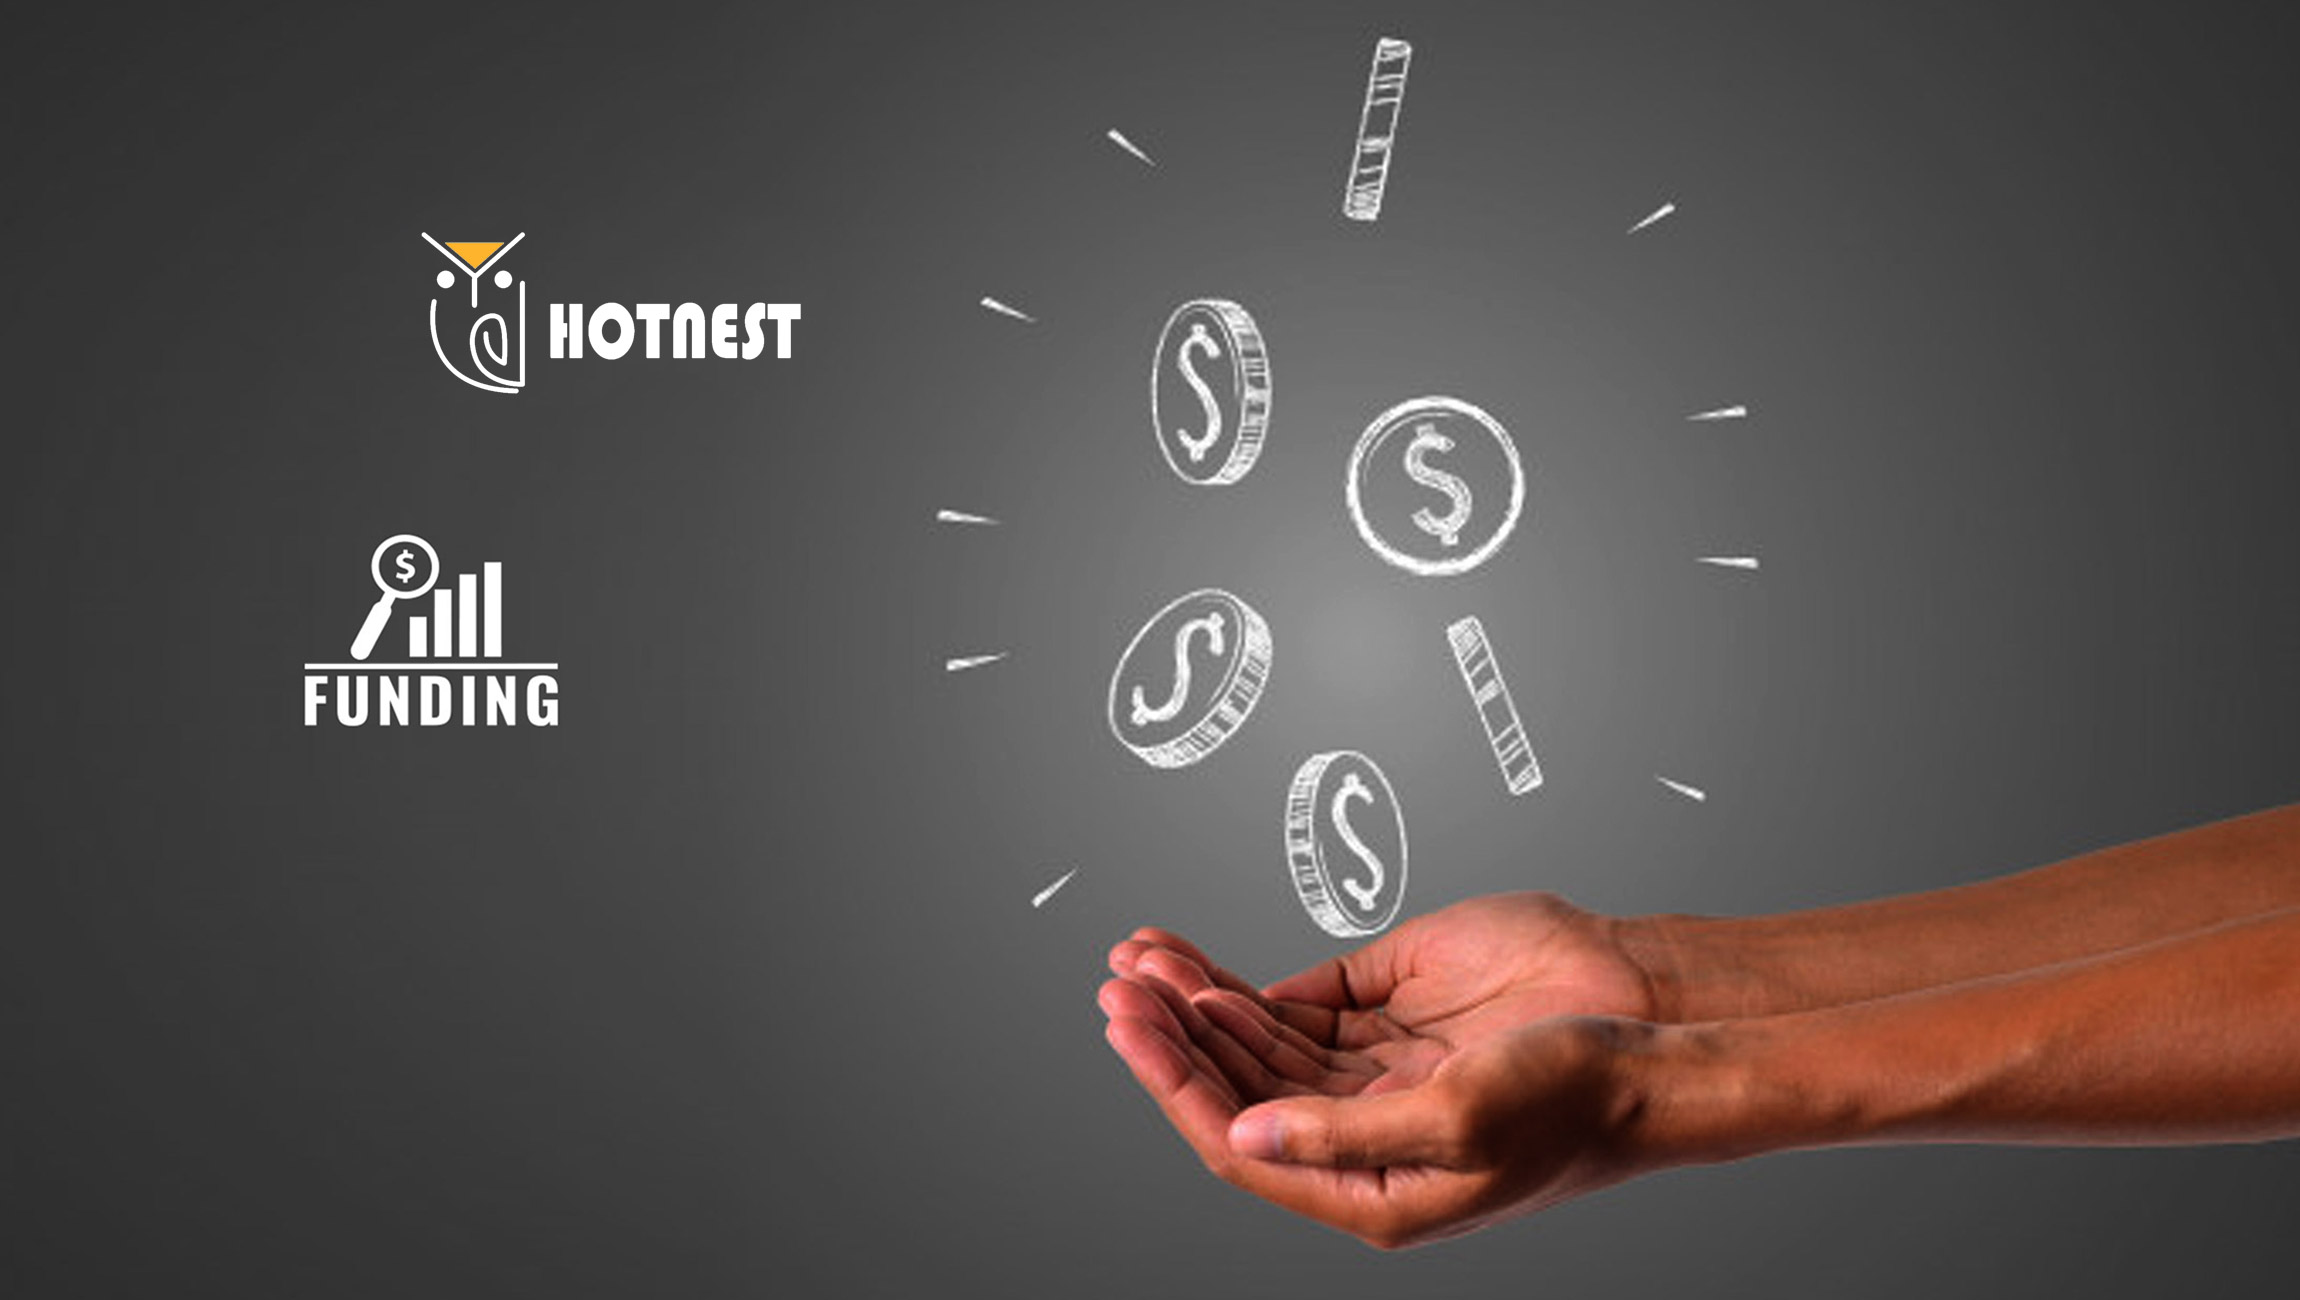 Hotnest Raises USD 6 Million to Automatize Marketing and Sales for SMEs